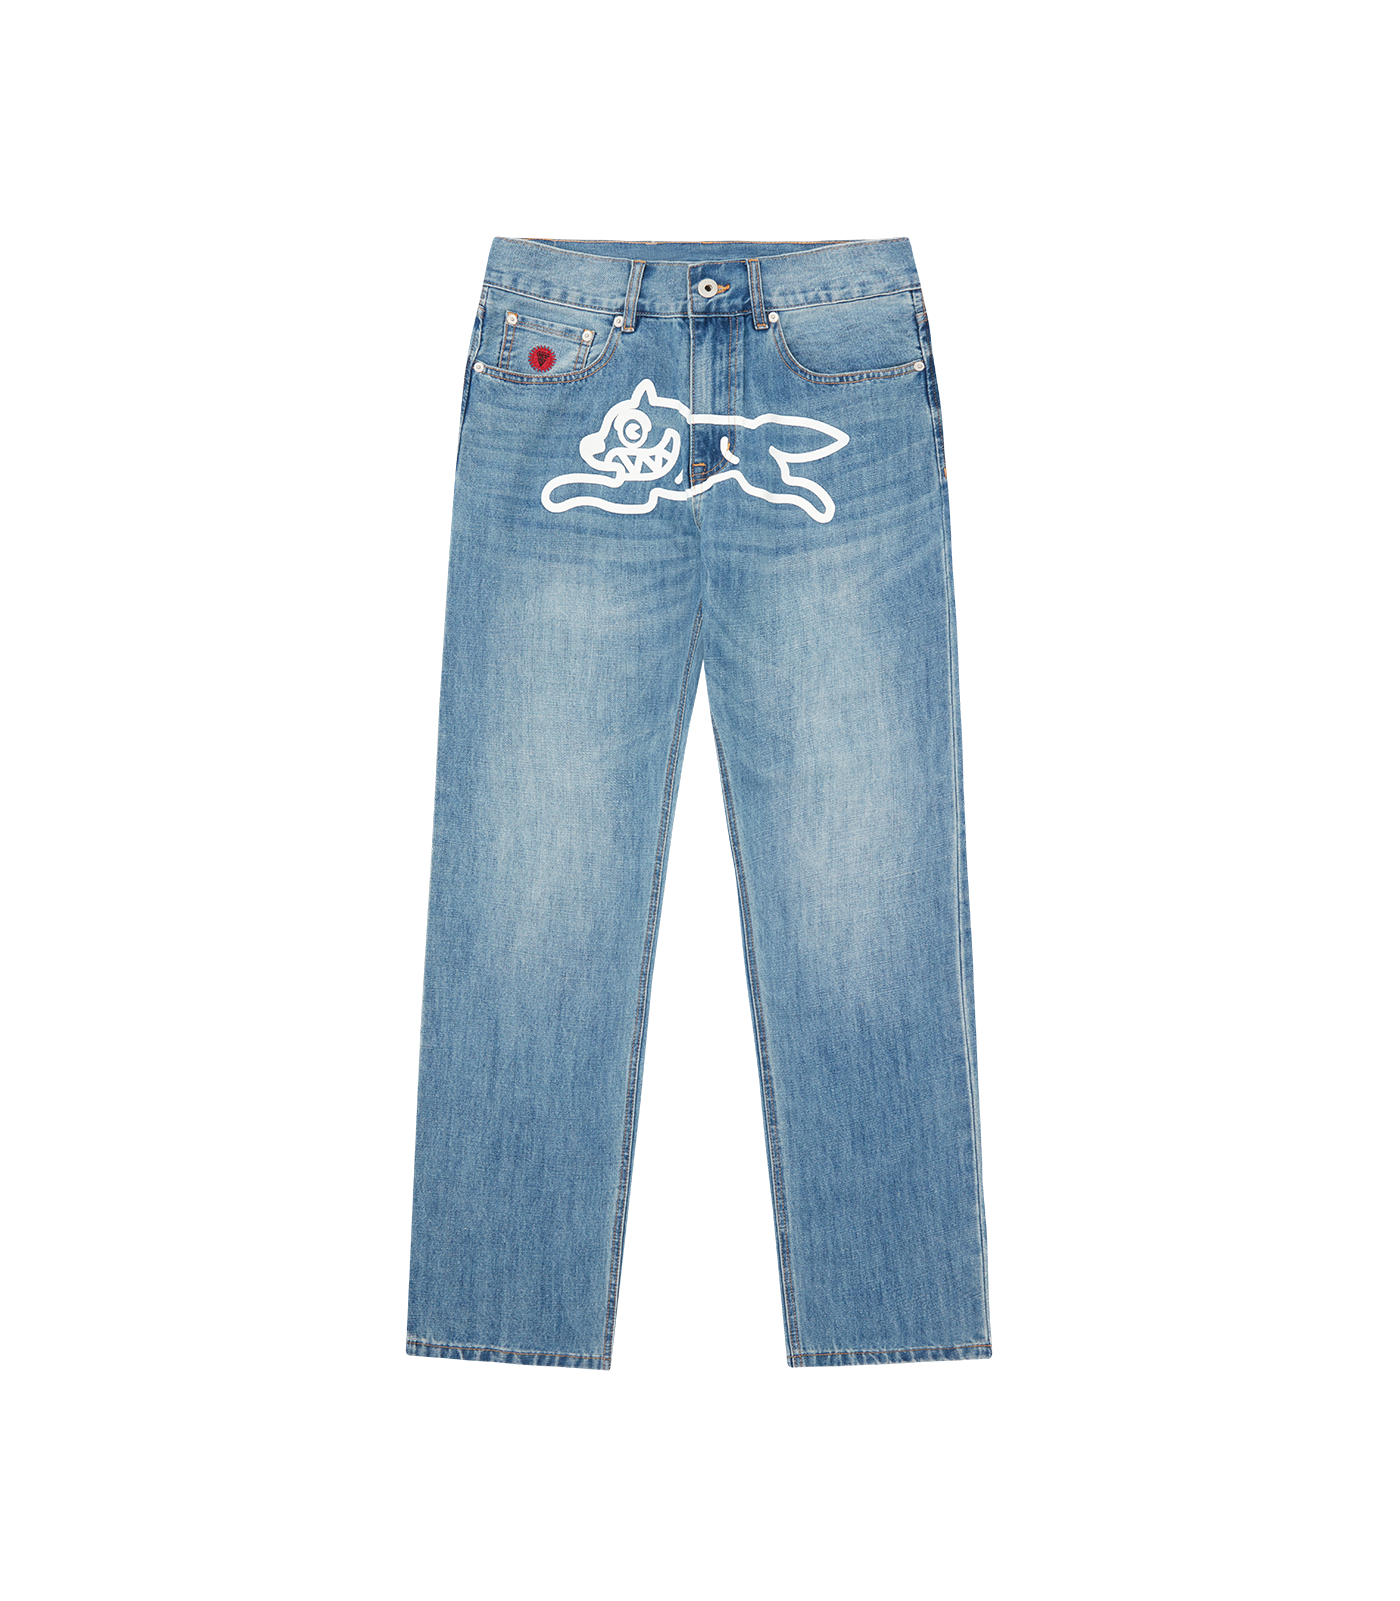 40cmx105cmrunning dog denim jeans BBC ICECREAM デニム